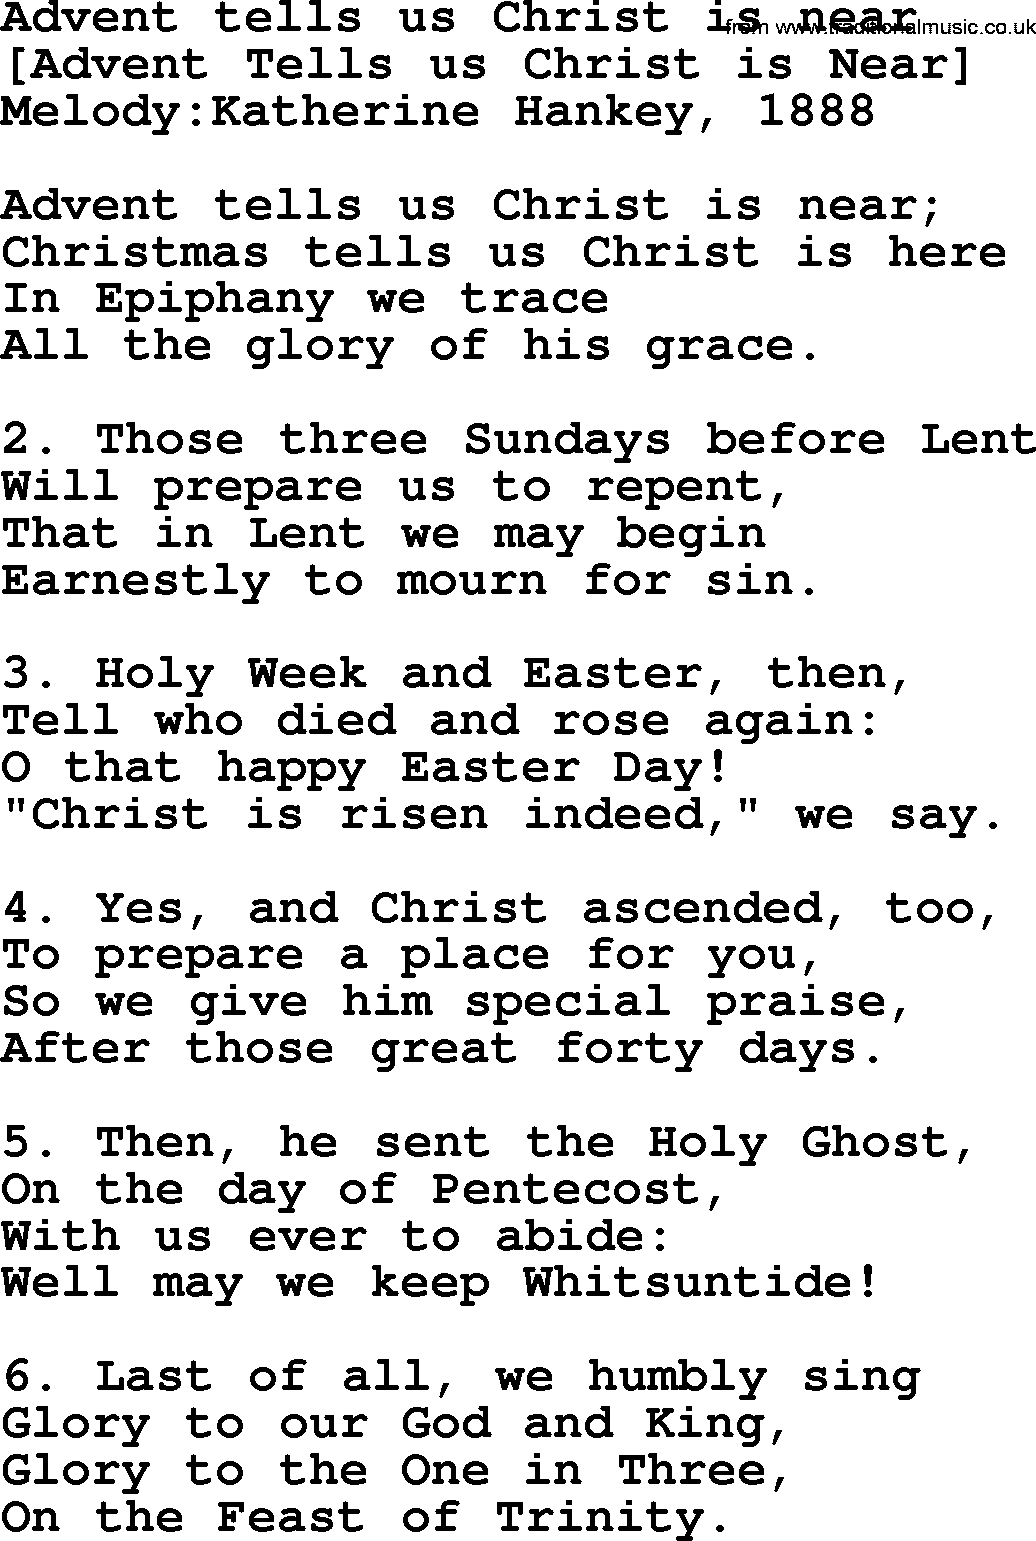 Old English Song: Advent Tells Us Christ Is Near lyrics